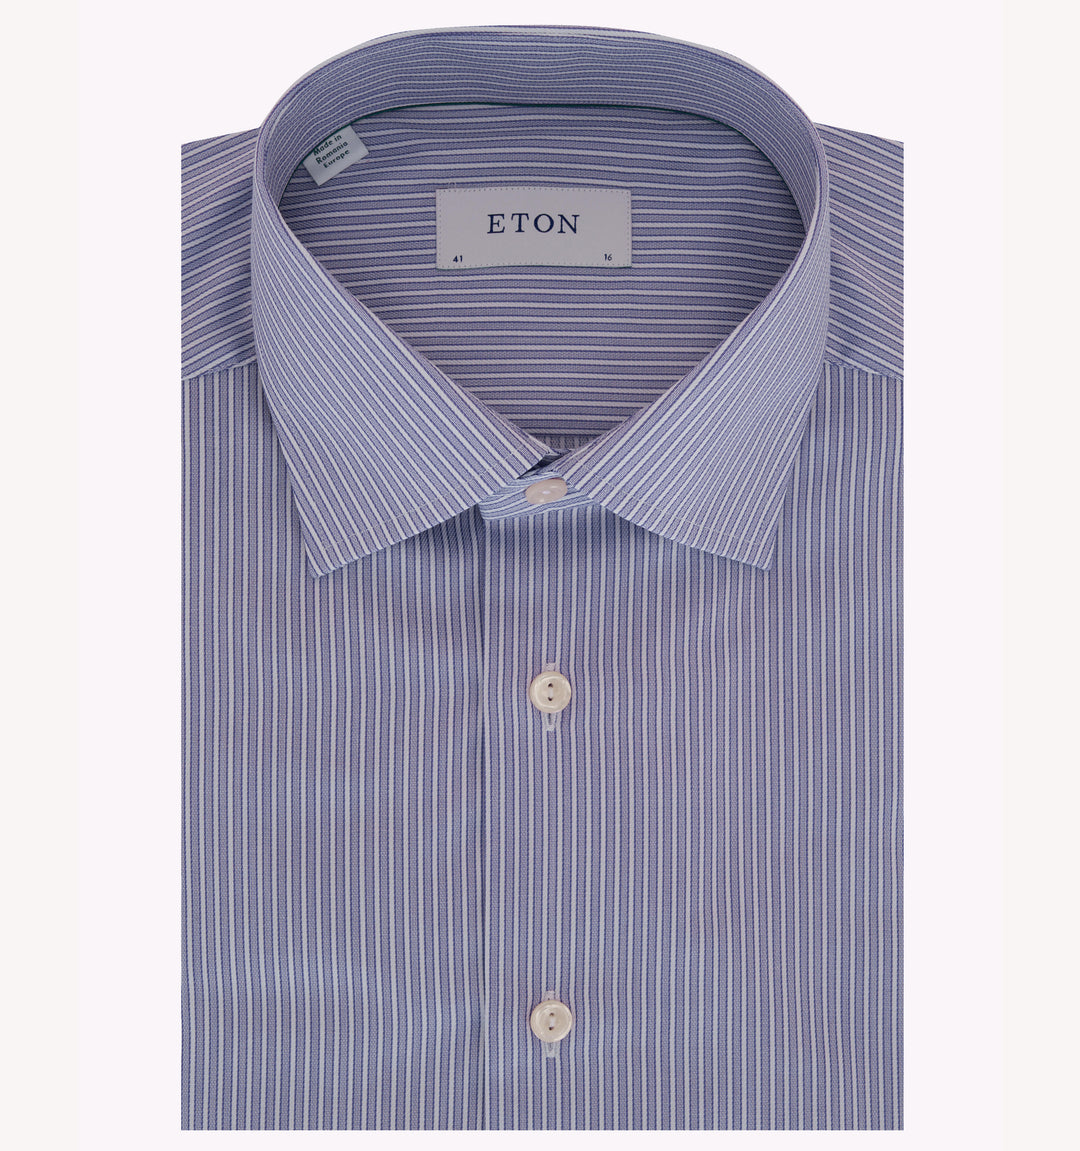 Eton Stripe Dress Shirt in Dark Blue